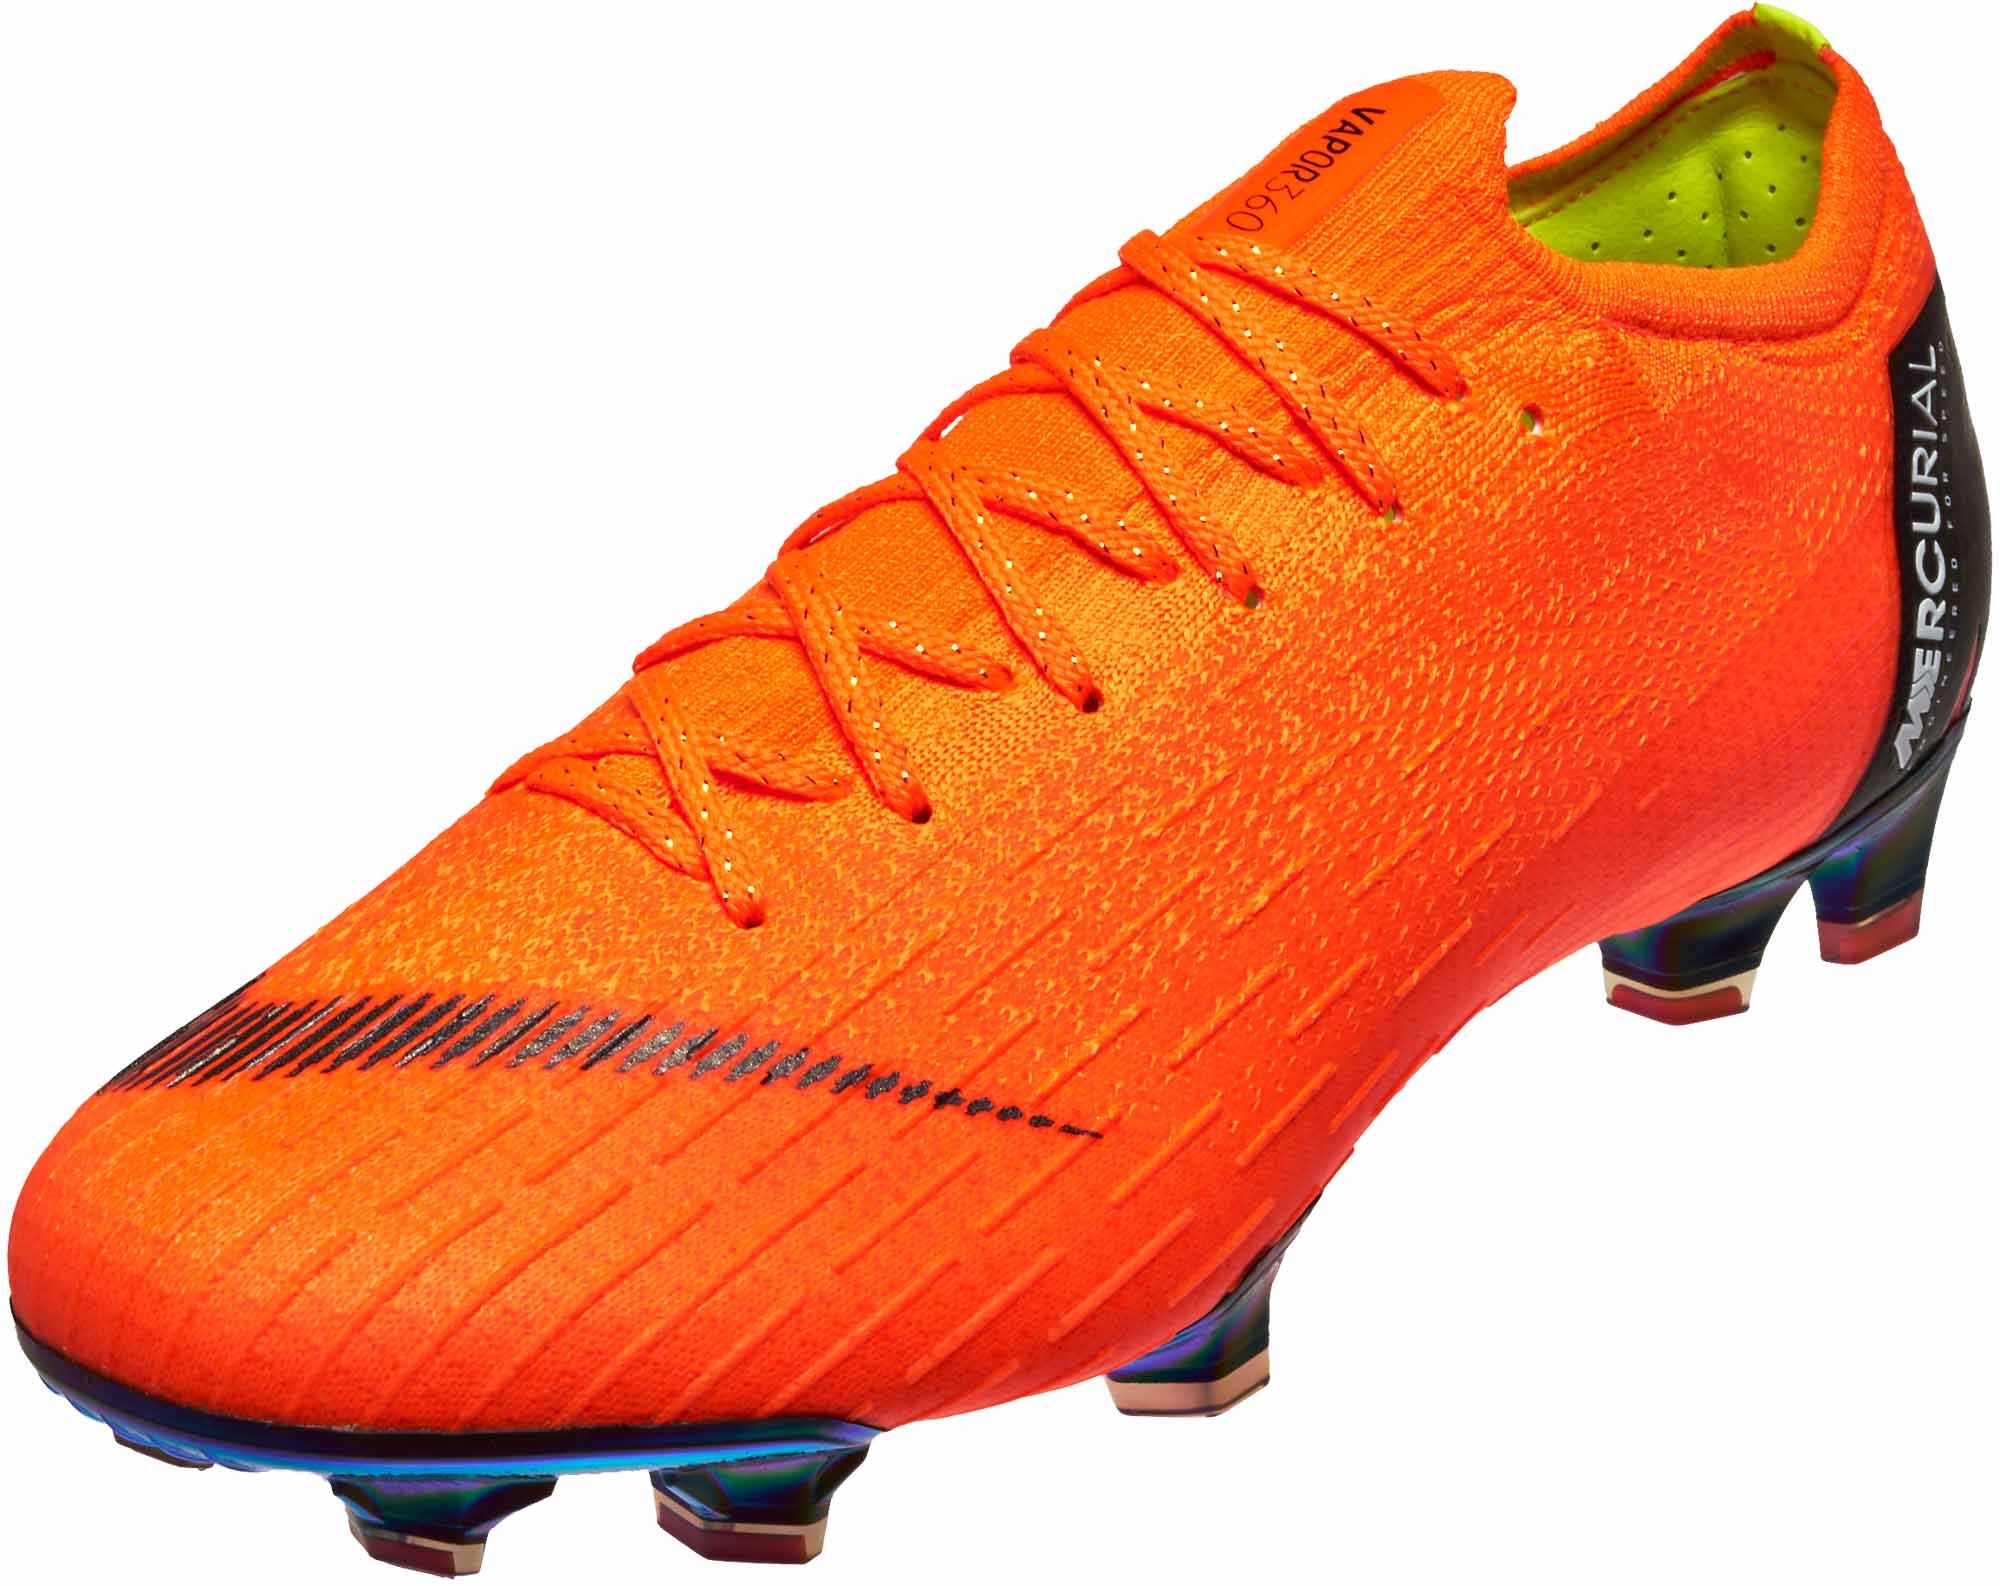 Nike Vapor 12 Elite FG - Total Orange/Volt - SoccerPro